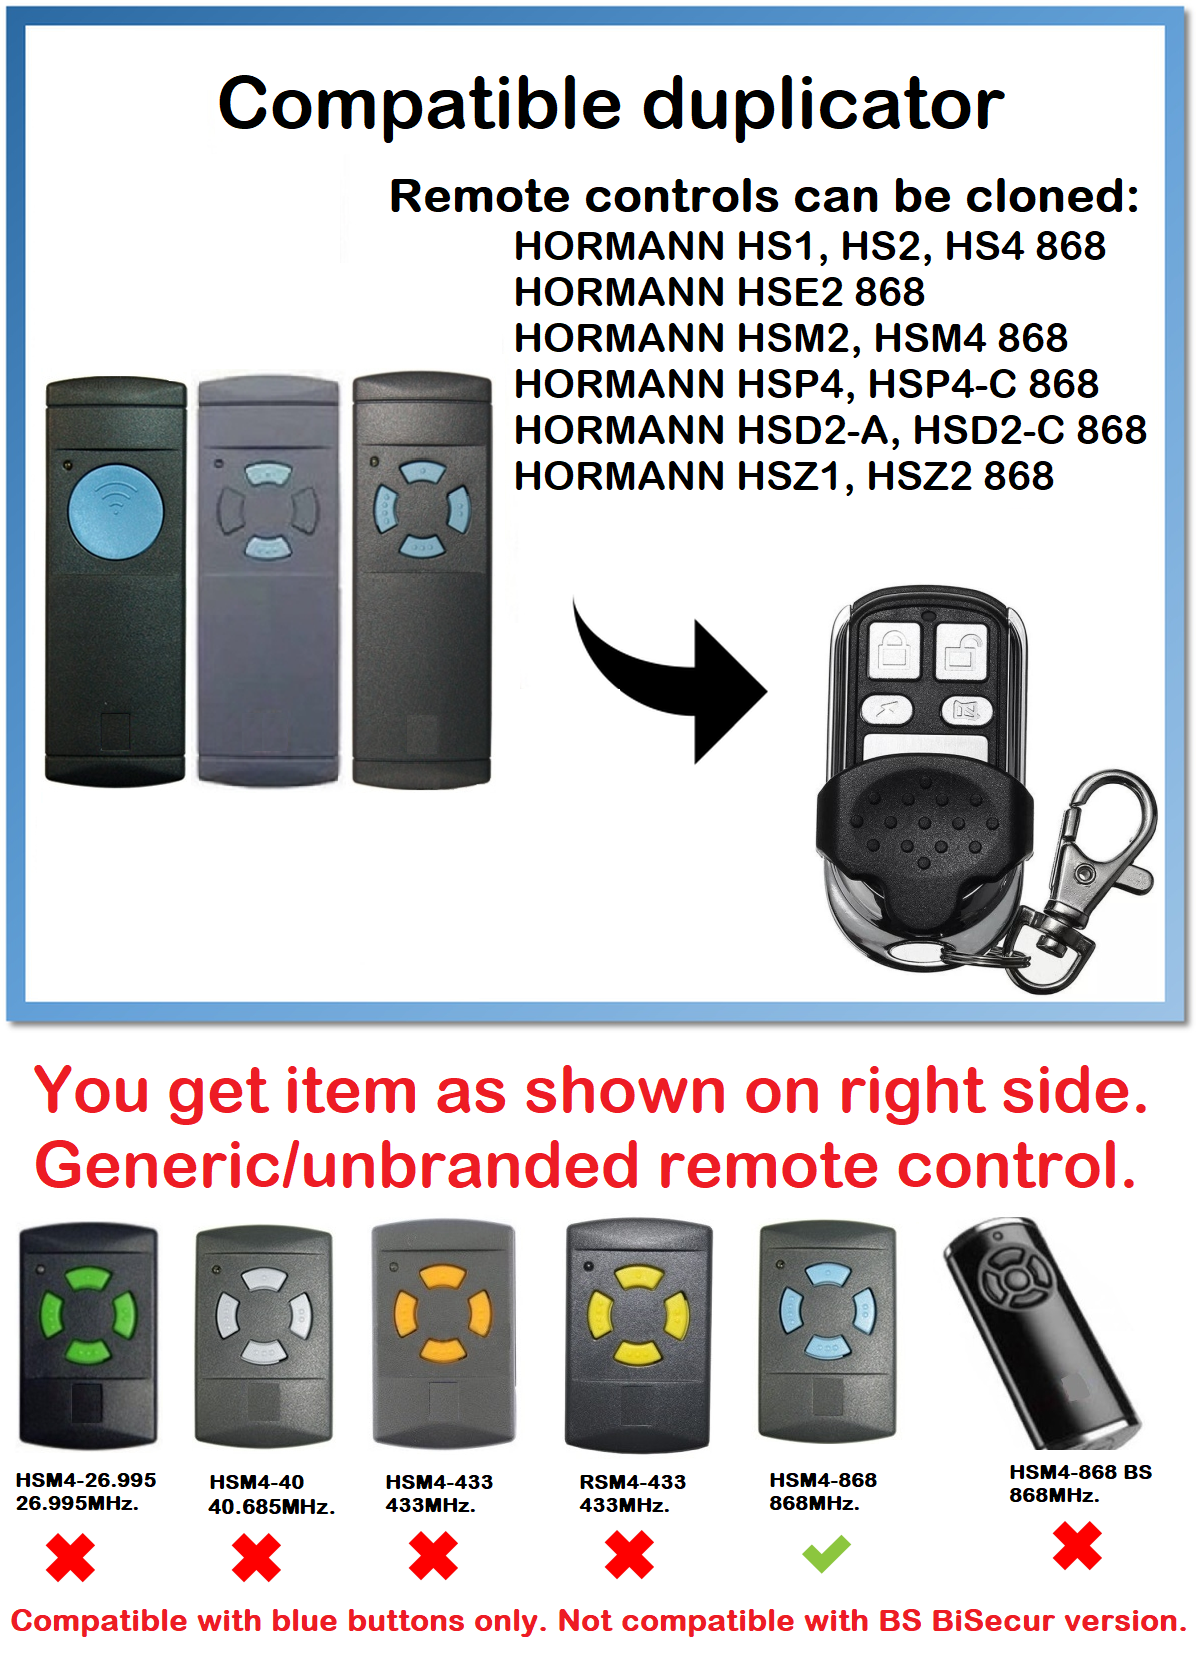 Garador 868mhz Remote control duplicator compatible with Marantec/Hormann/Garador 